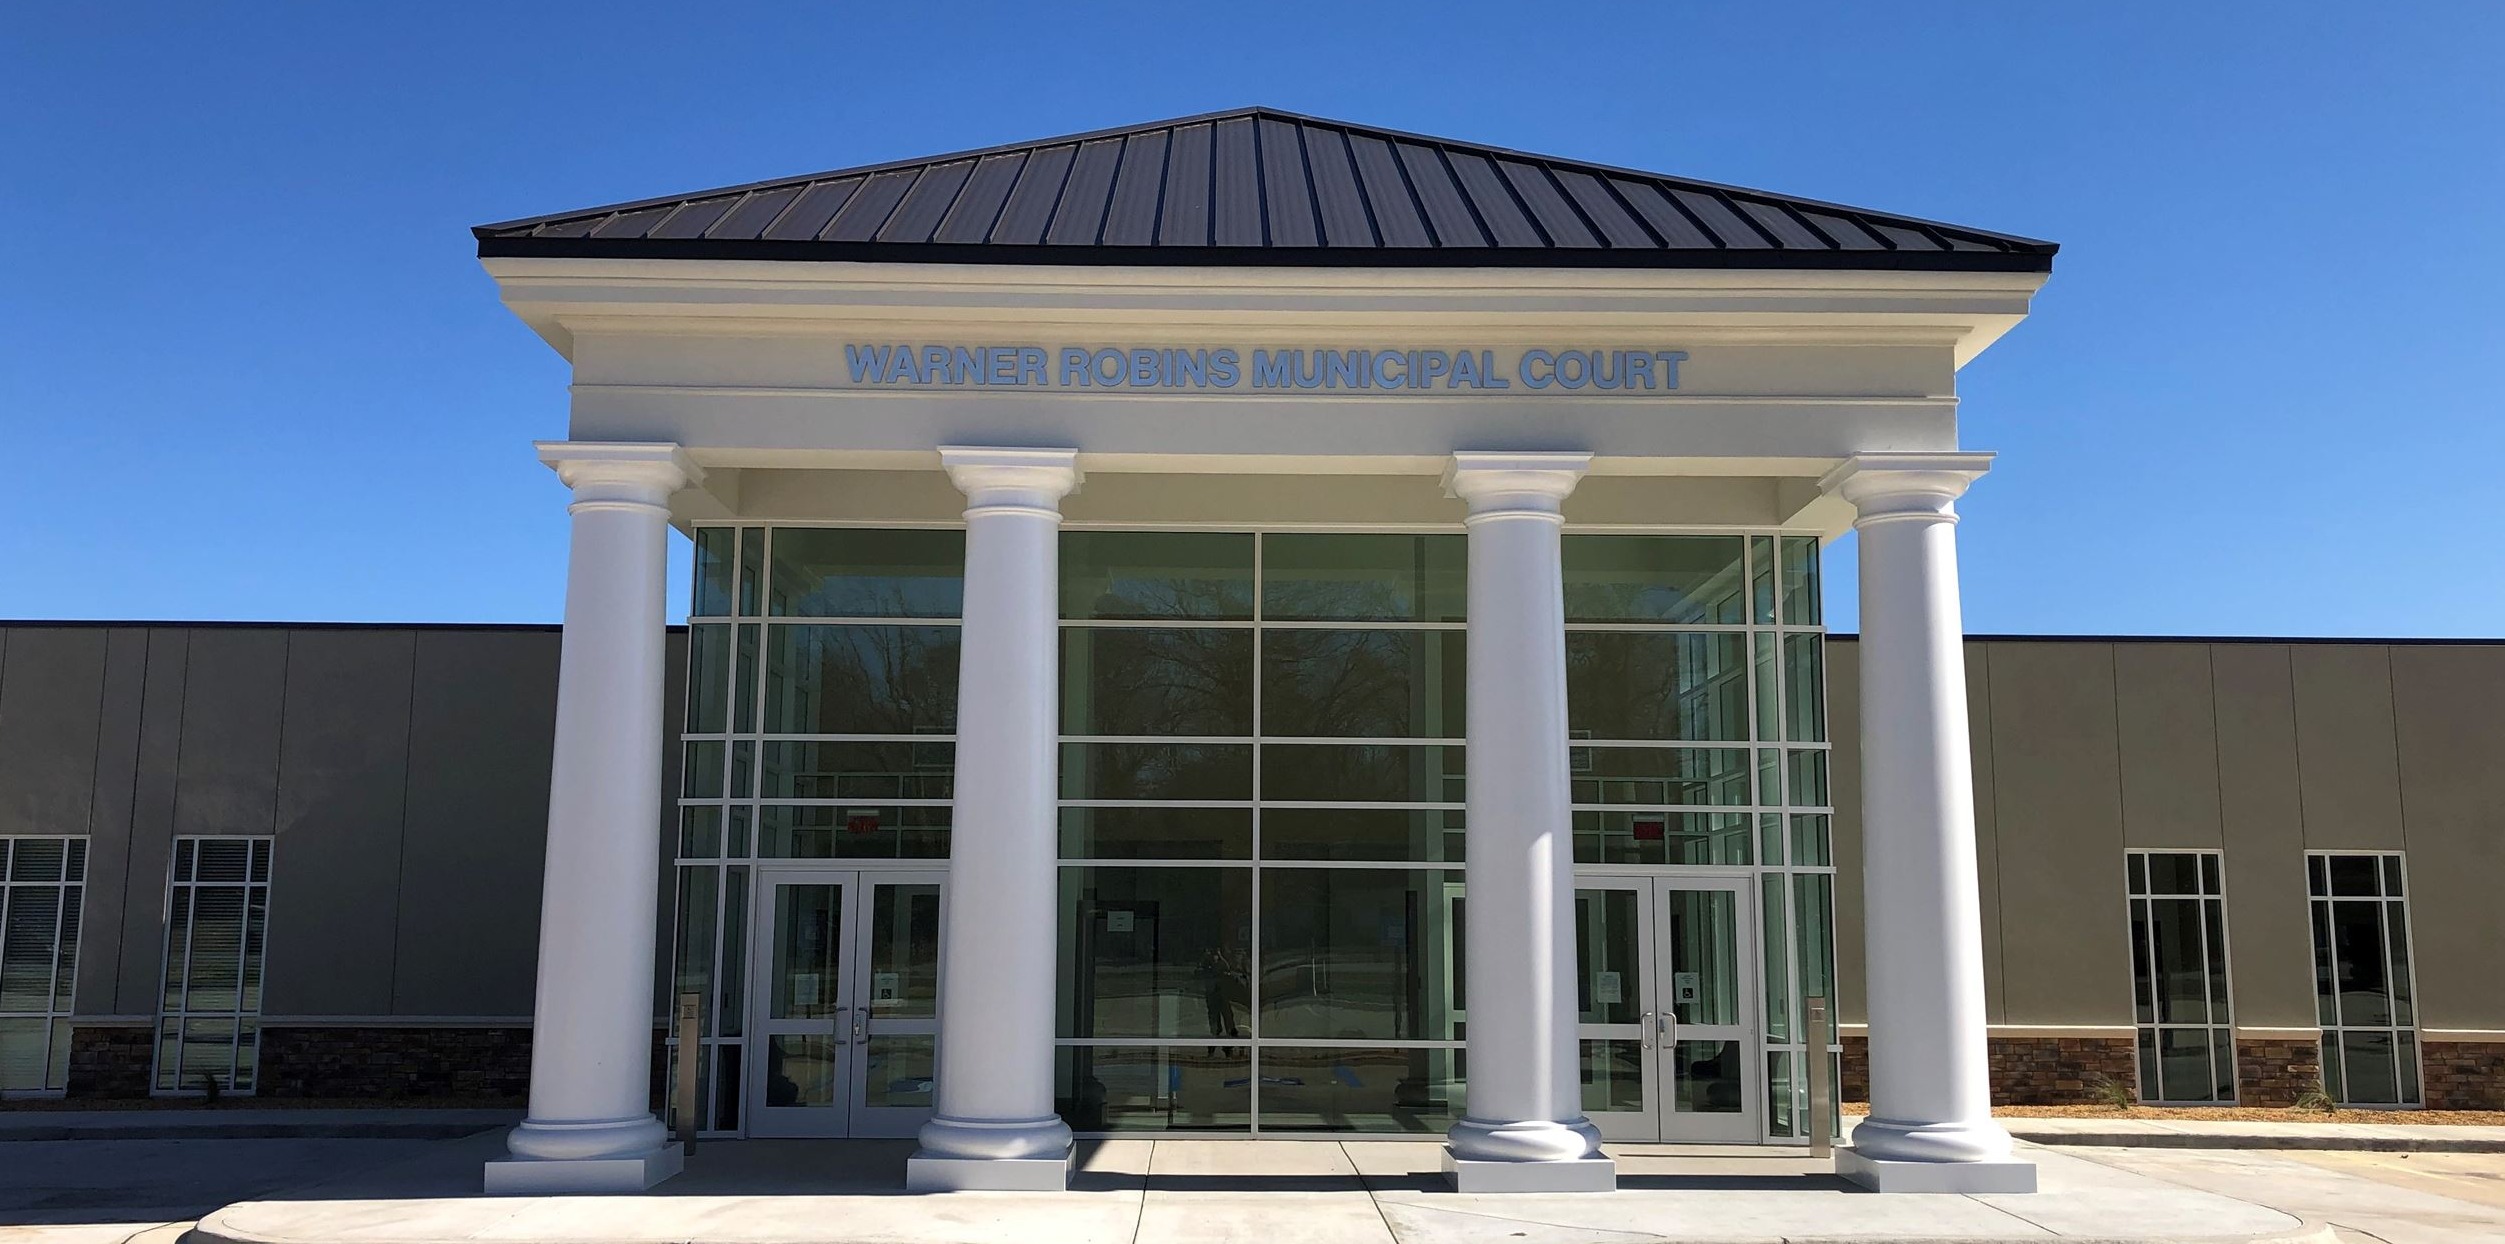 Warner Robins Municipal Court